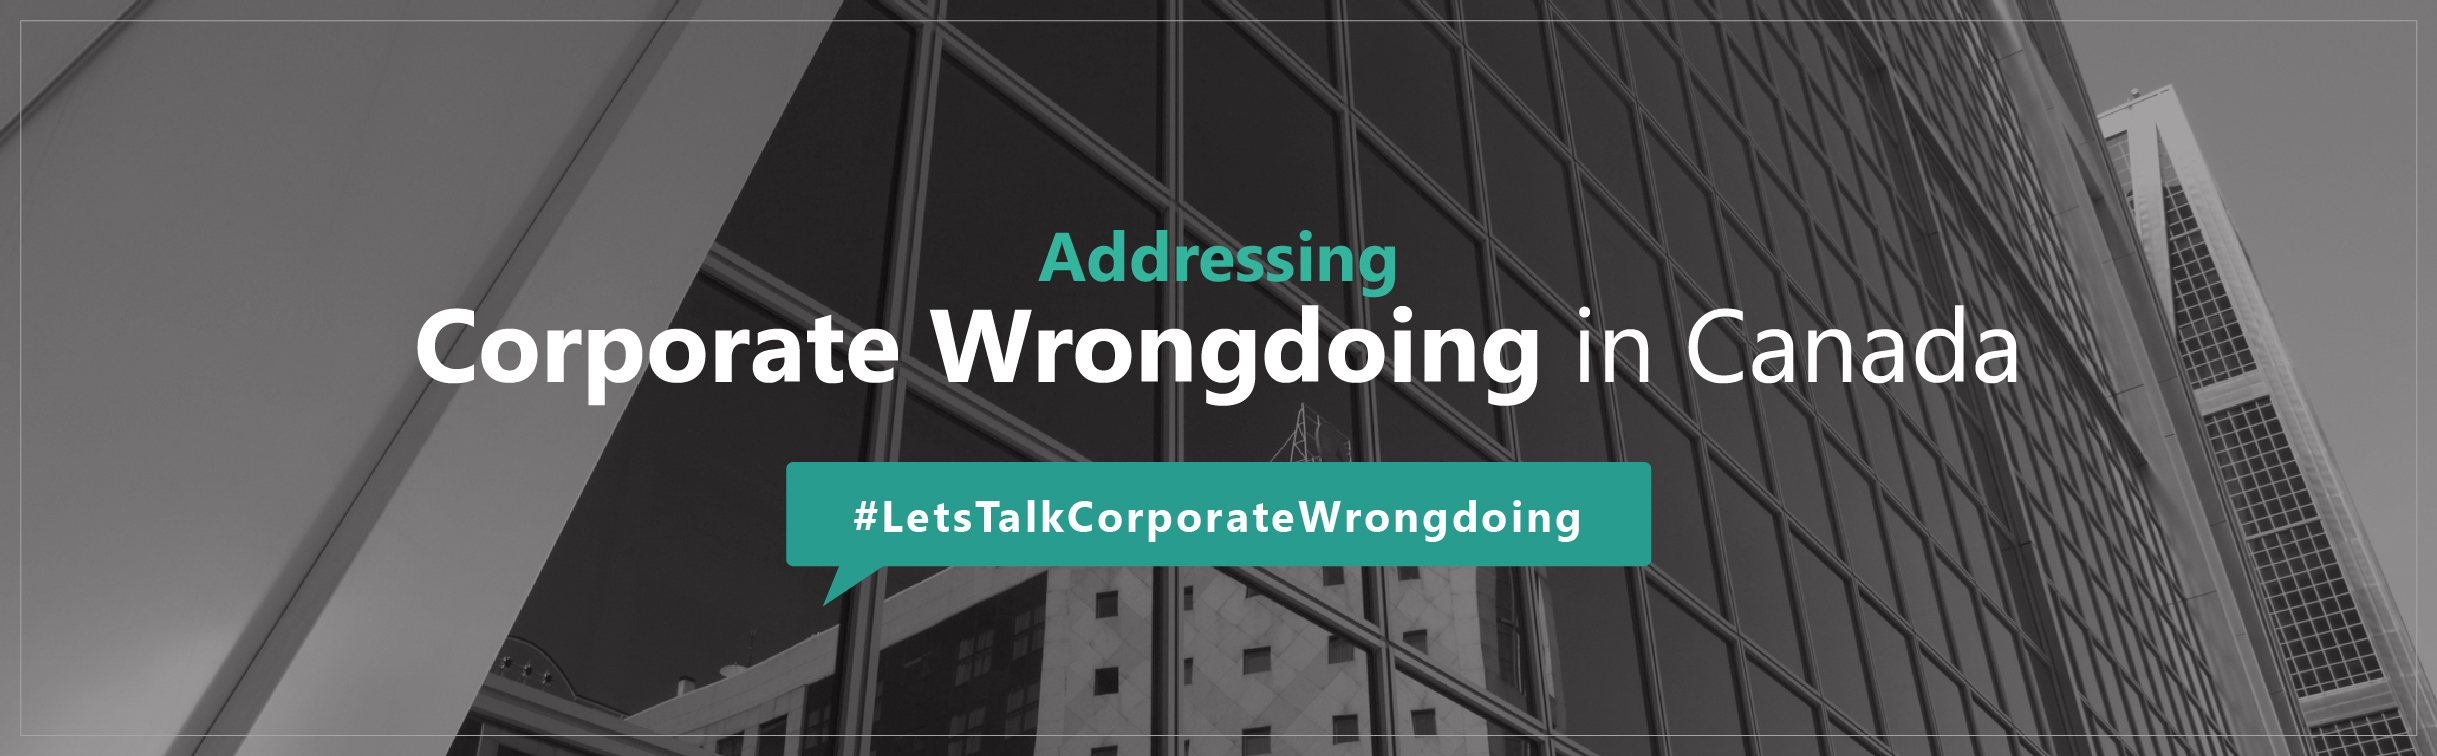 Addressing Corporate Wrongdoing in Canada - #LetsTalkCorporateWrongdoing